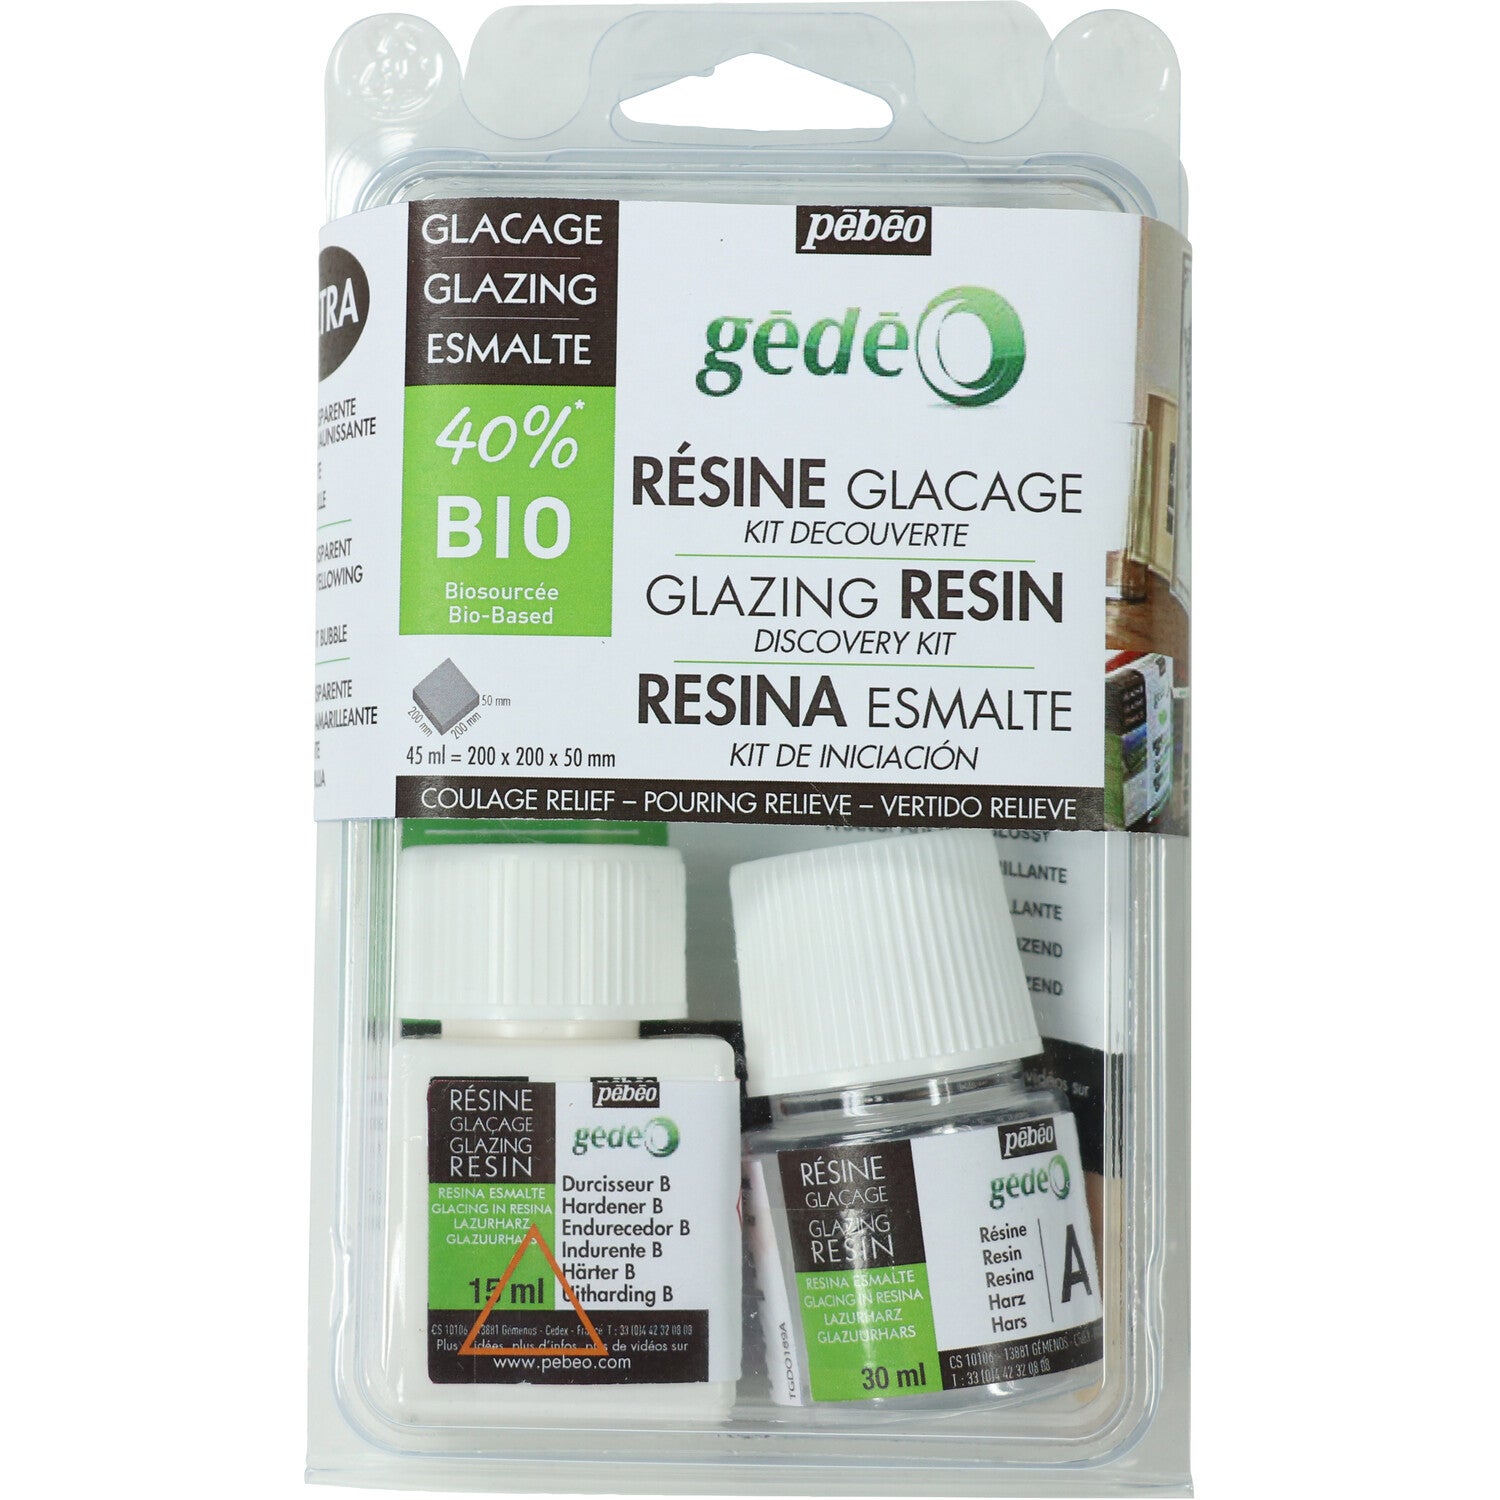 Pebeo - Gedeo - Glazing Bio Resin Discovery Kit 45ml